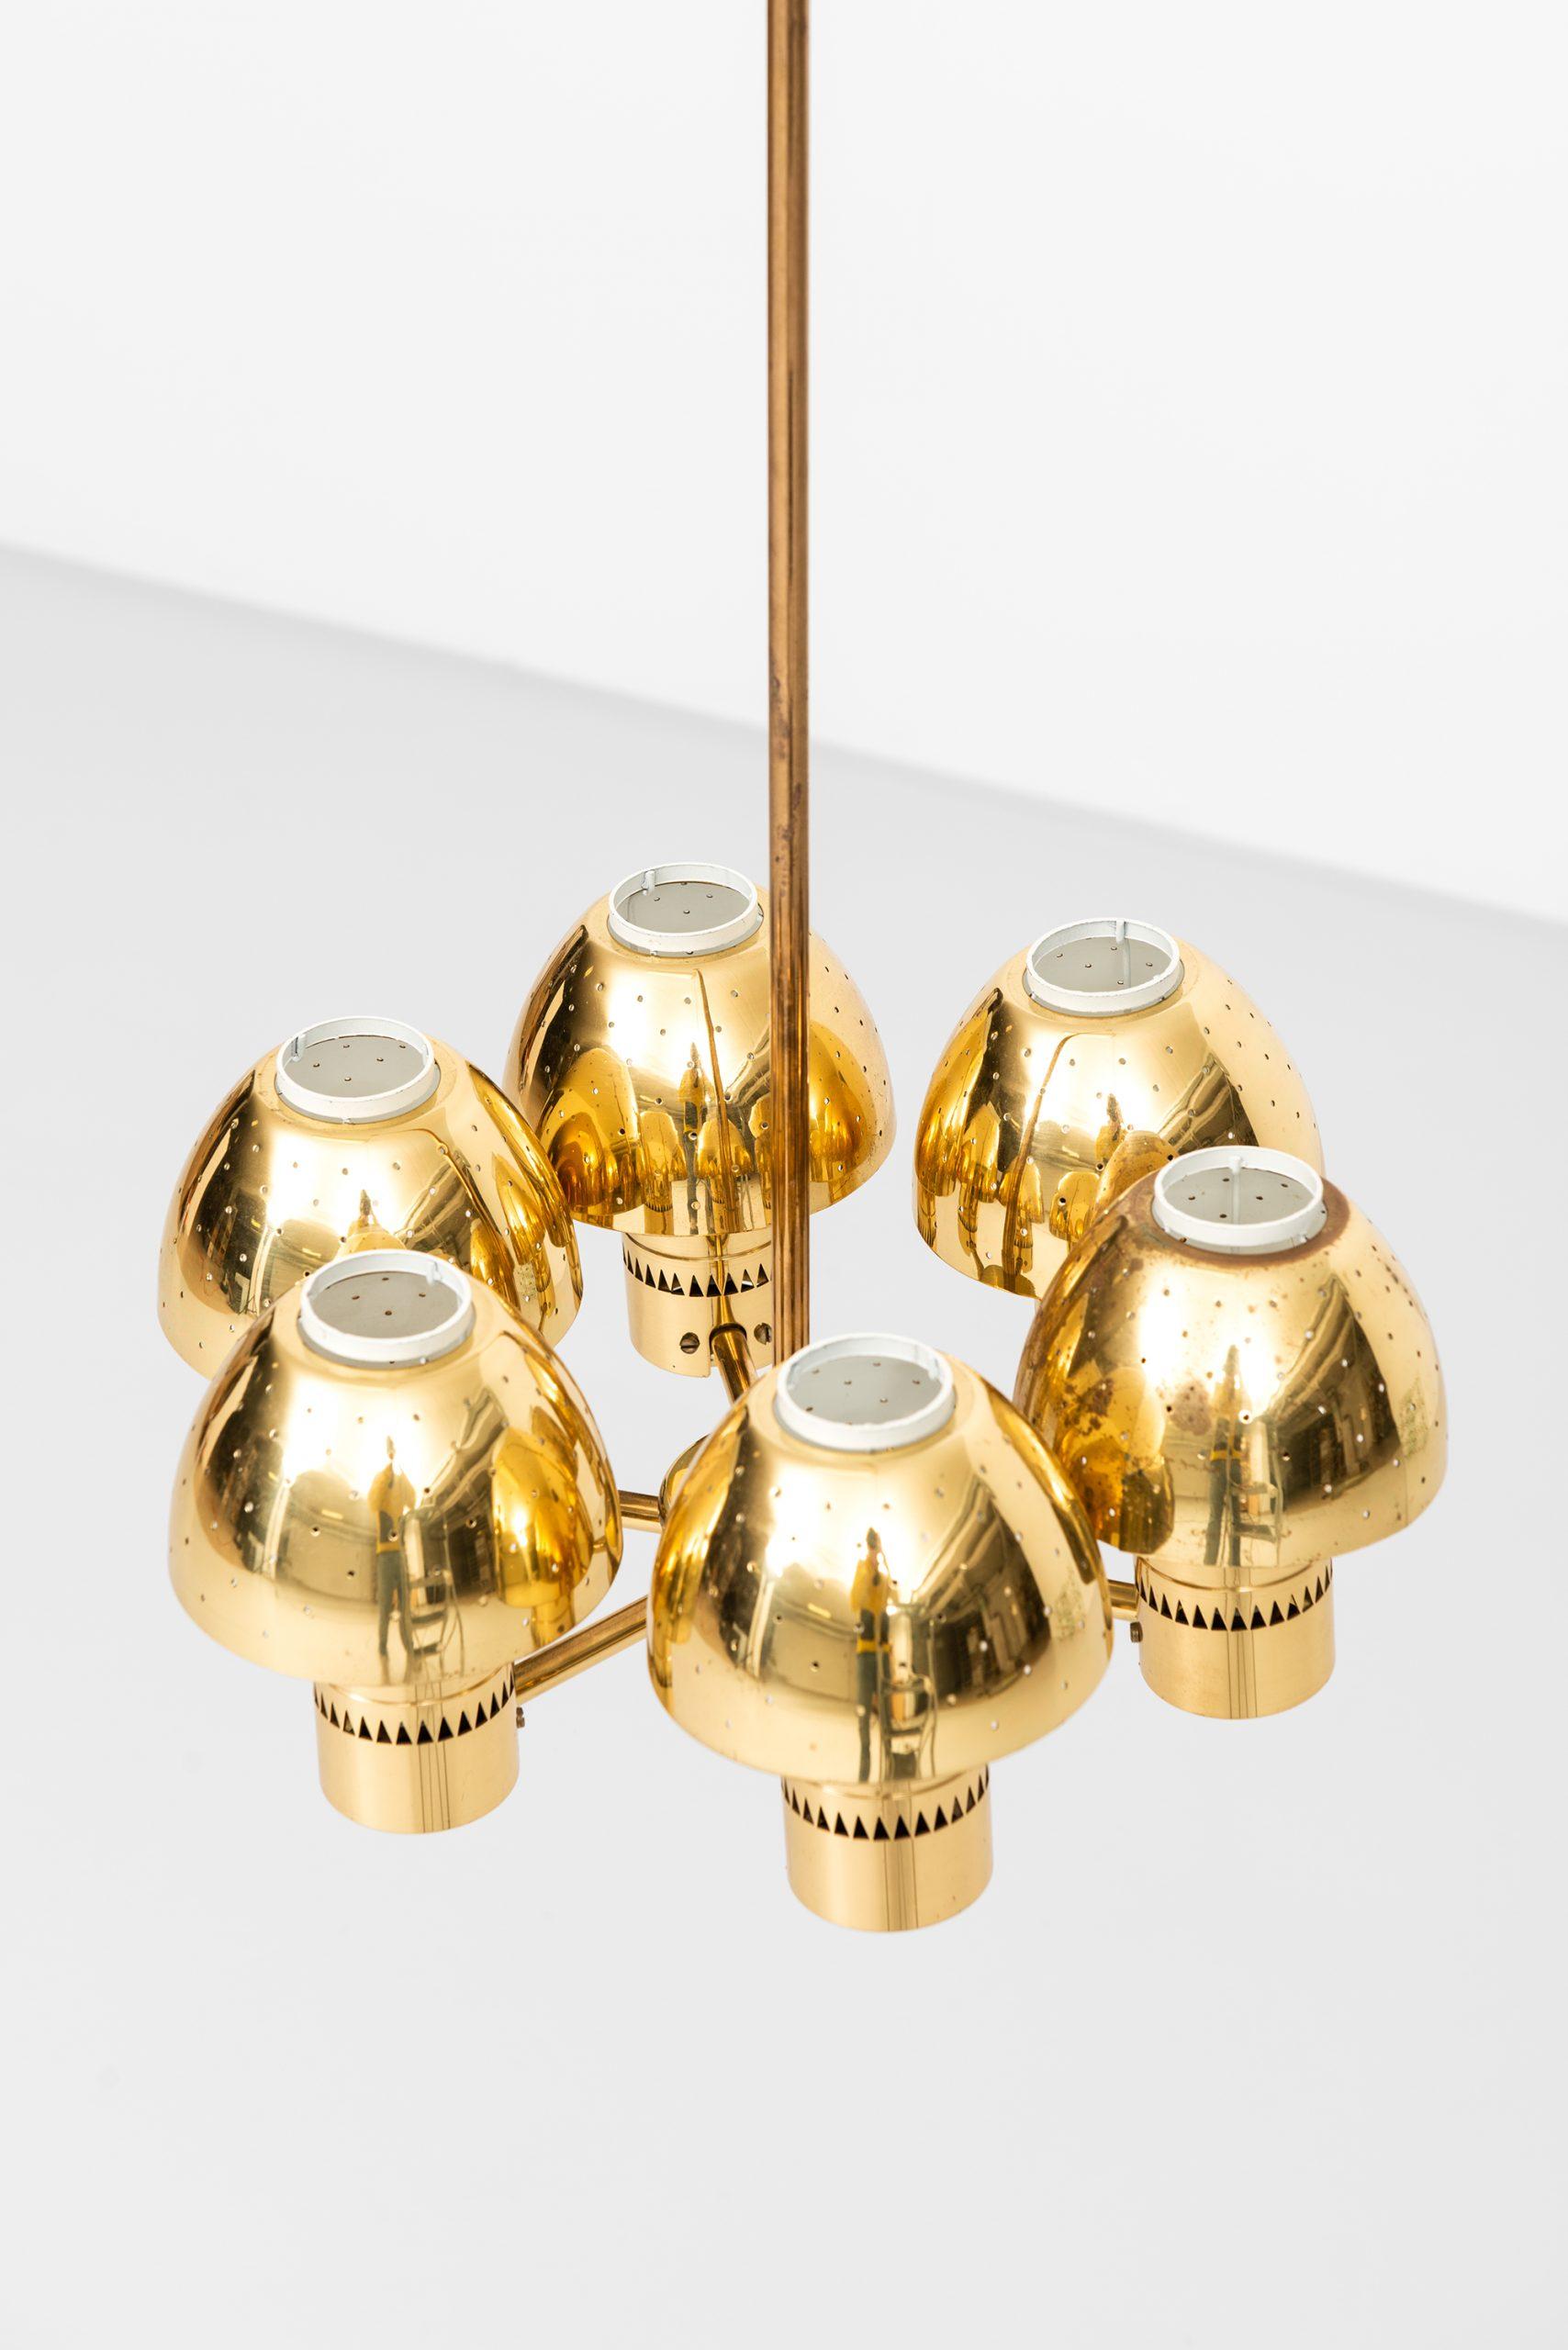 Rare ceiling lamp designed by Hans-Agne Jakobsson. Produced by Hans-Agne Jakobsson AB in Markaryd, Sweden.